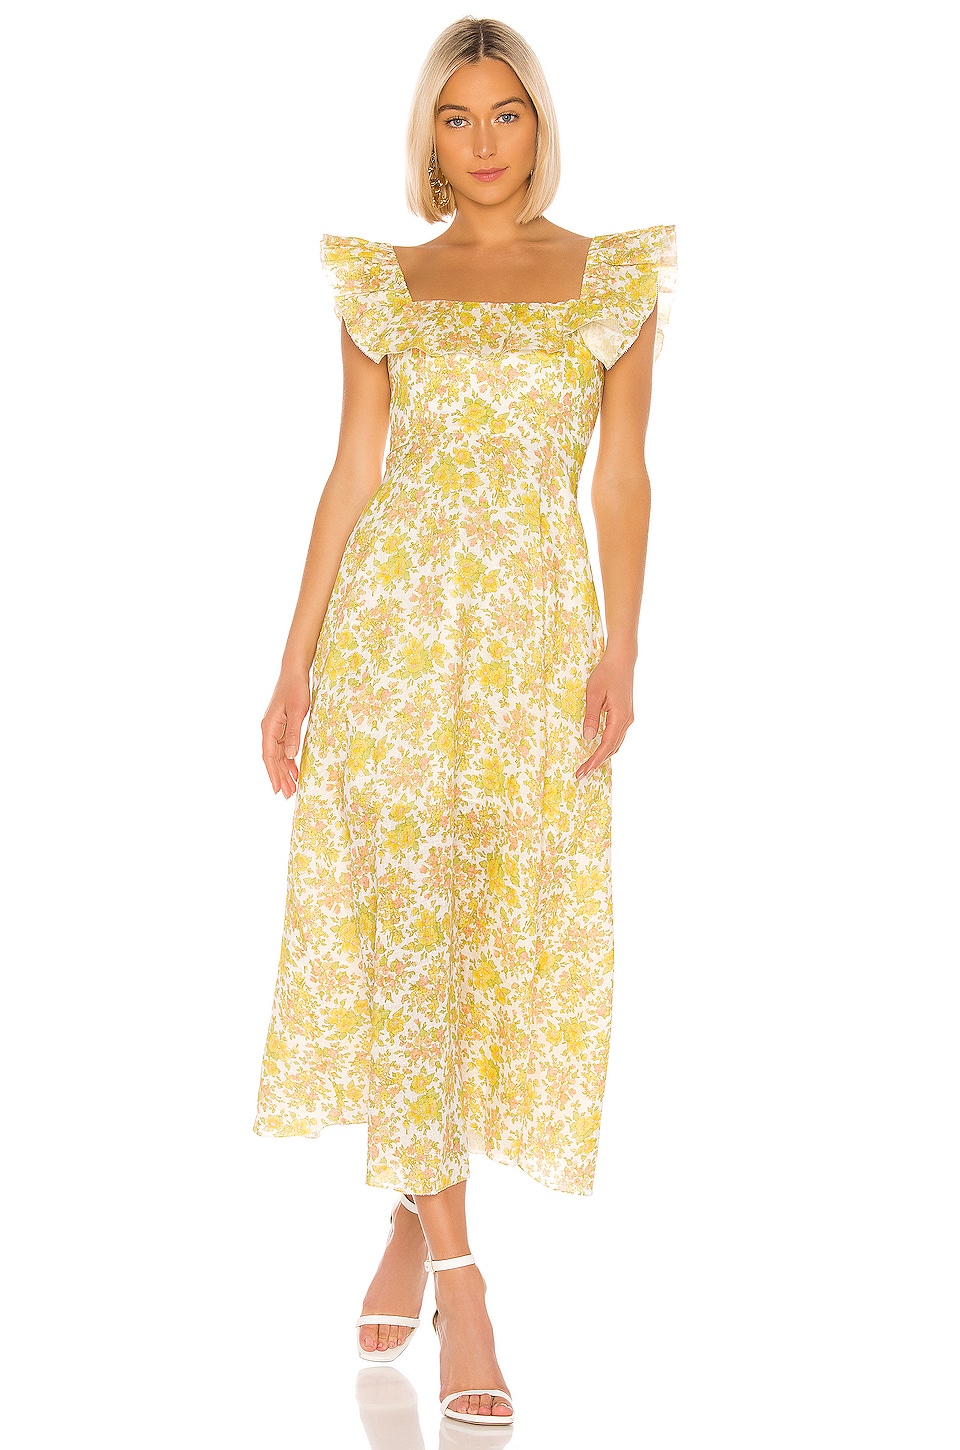 zimmermann yellow floral dress 645fc0